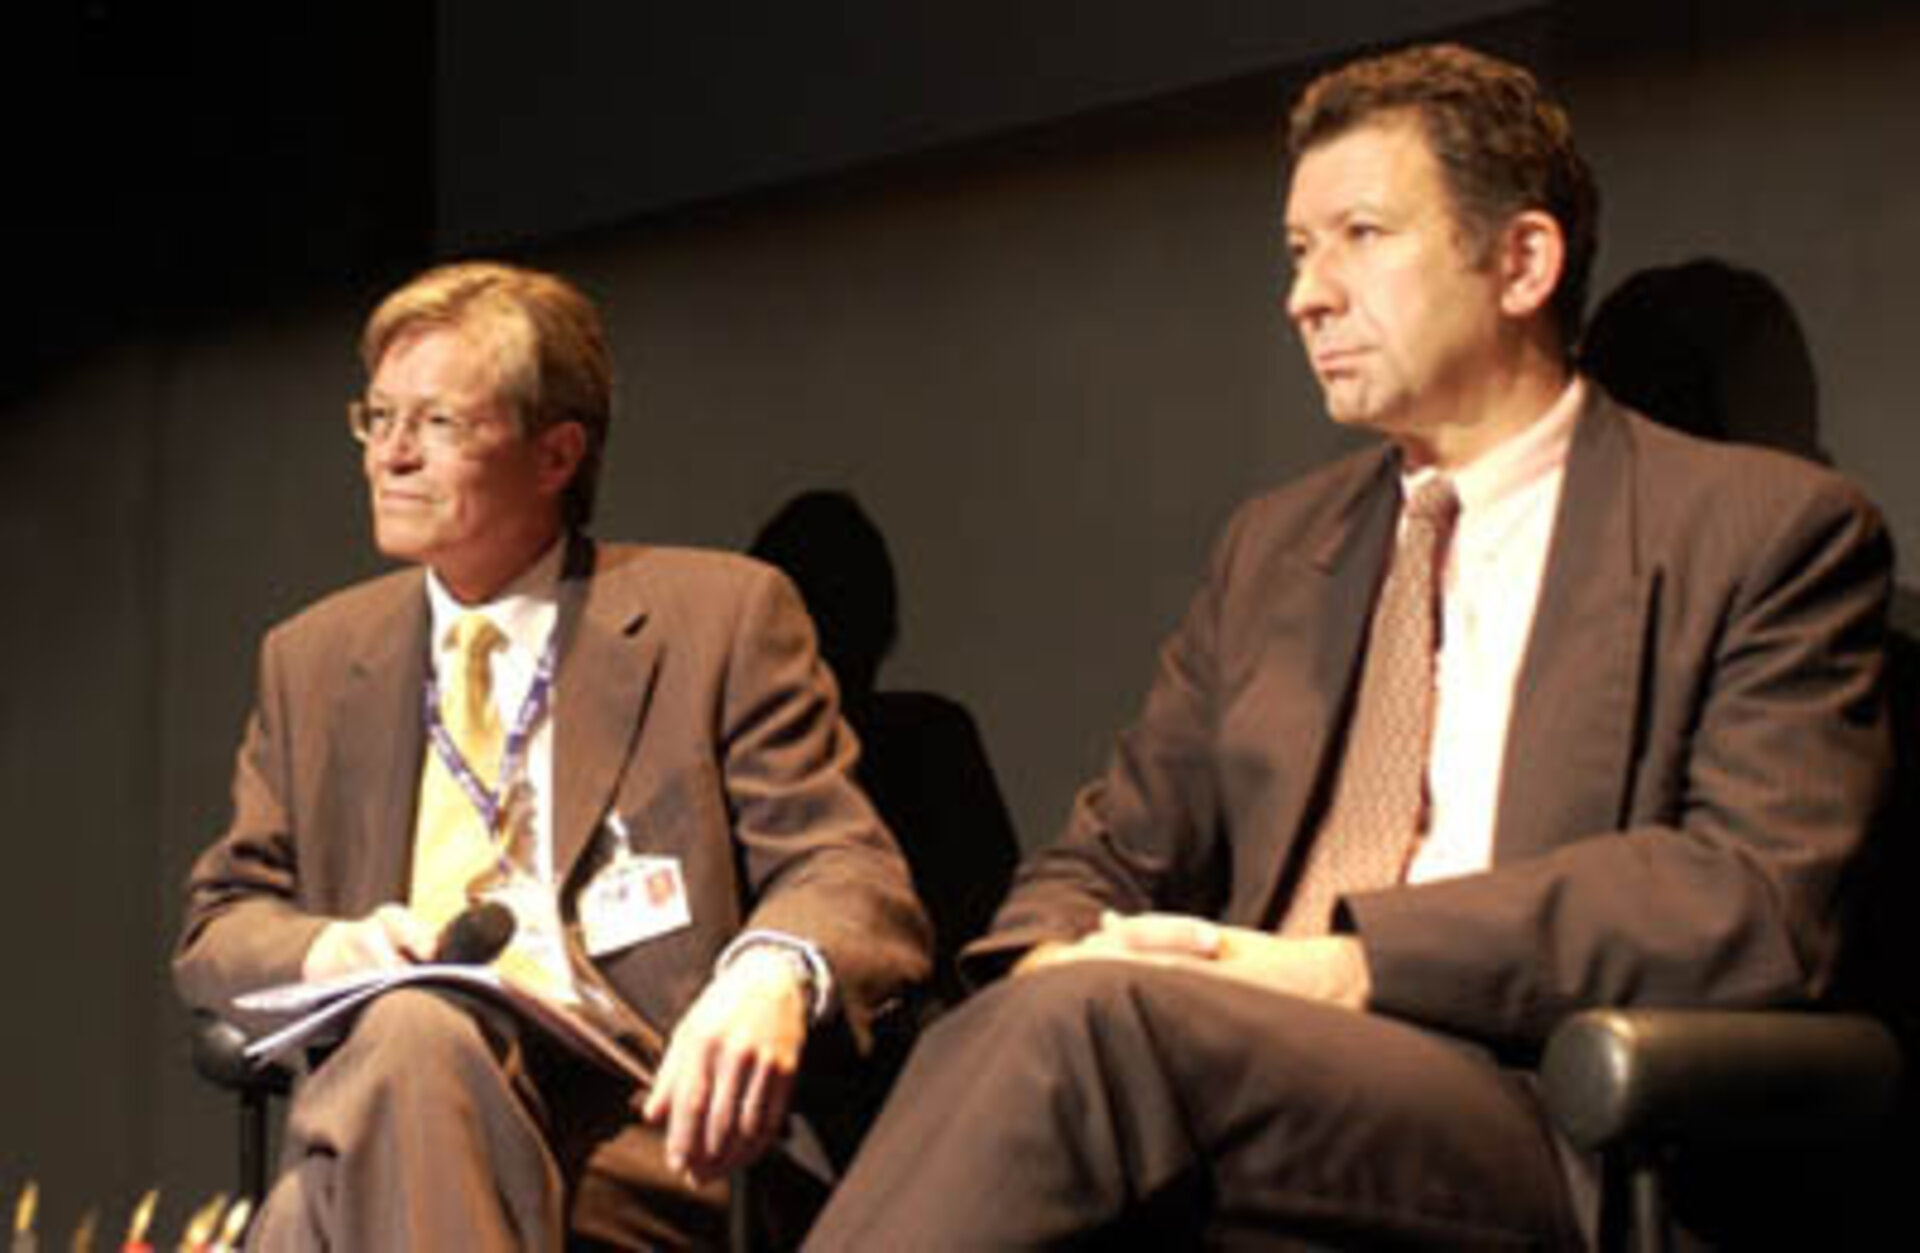 Geir Hovmork, IPC Chairman, and Luc Tytgat, EC